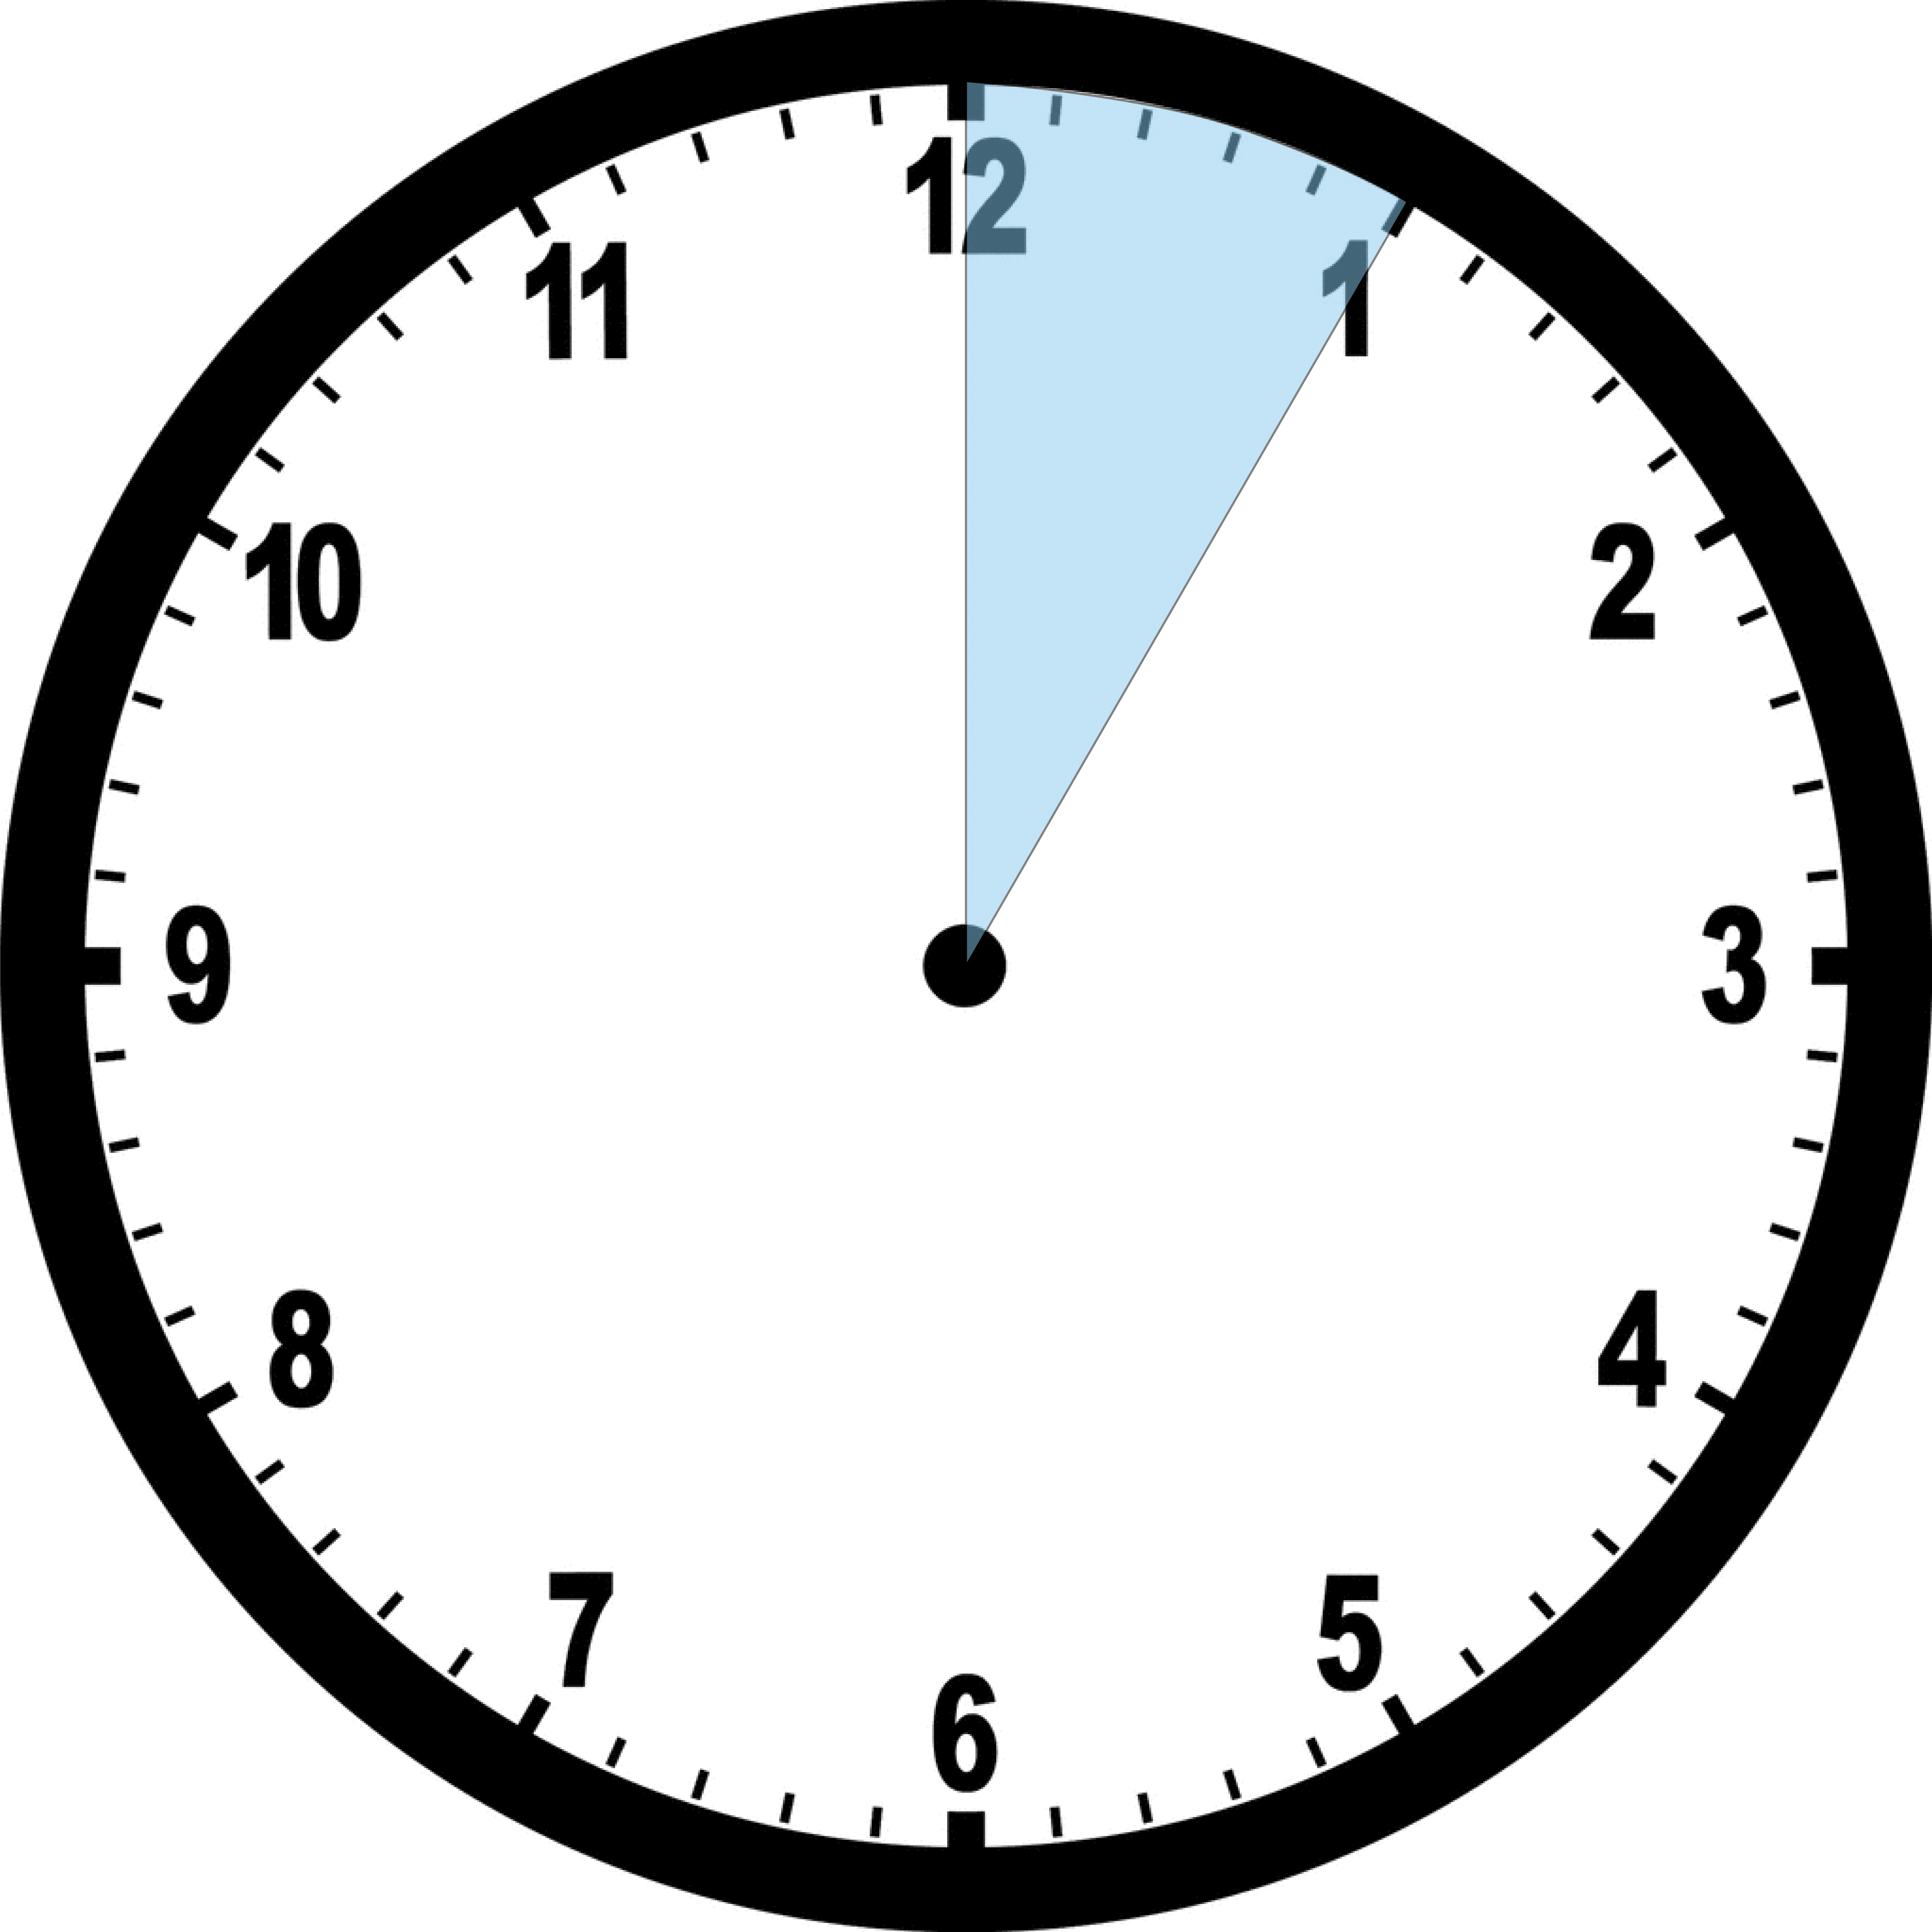 clock showing 1 hr elapsed